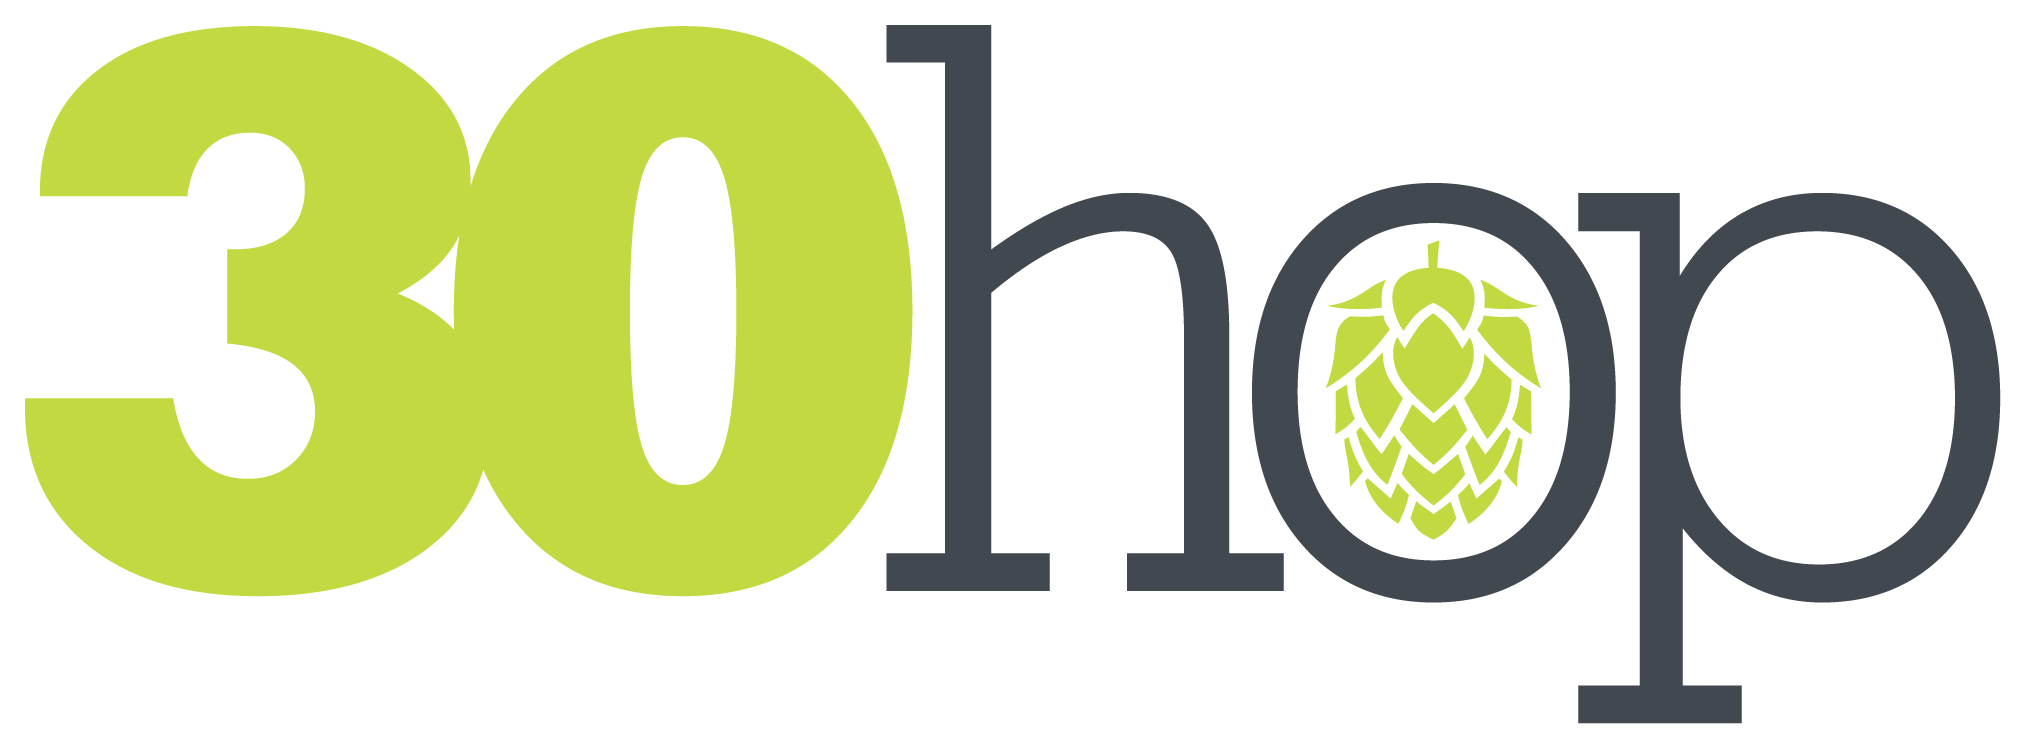 30hop-logo-color